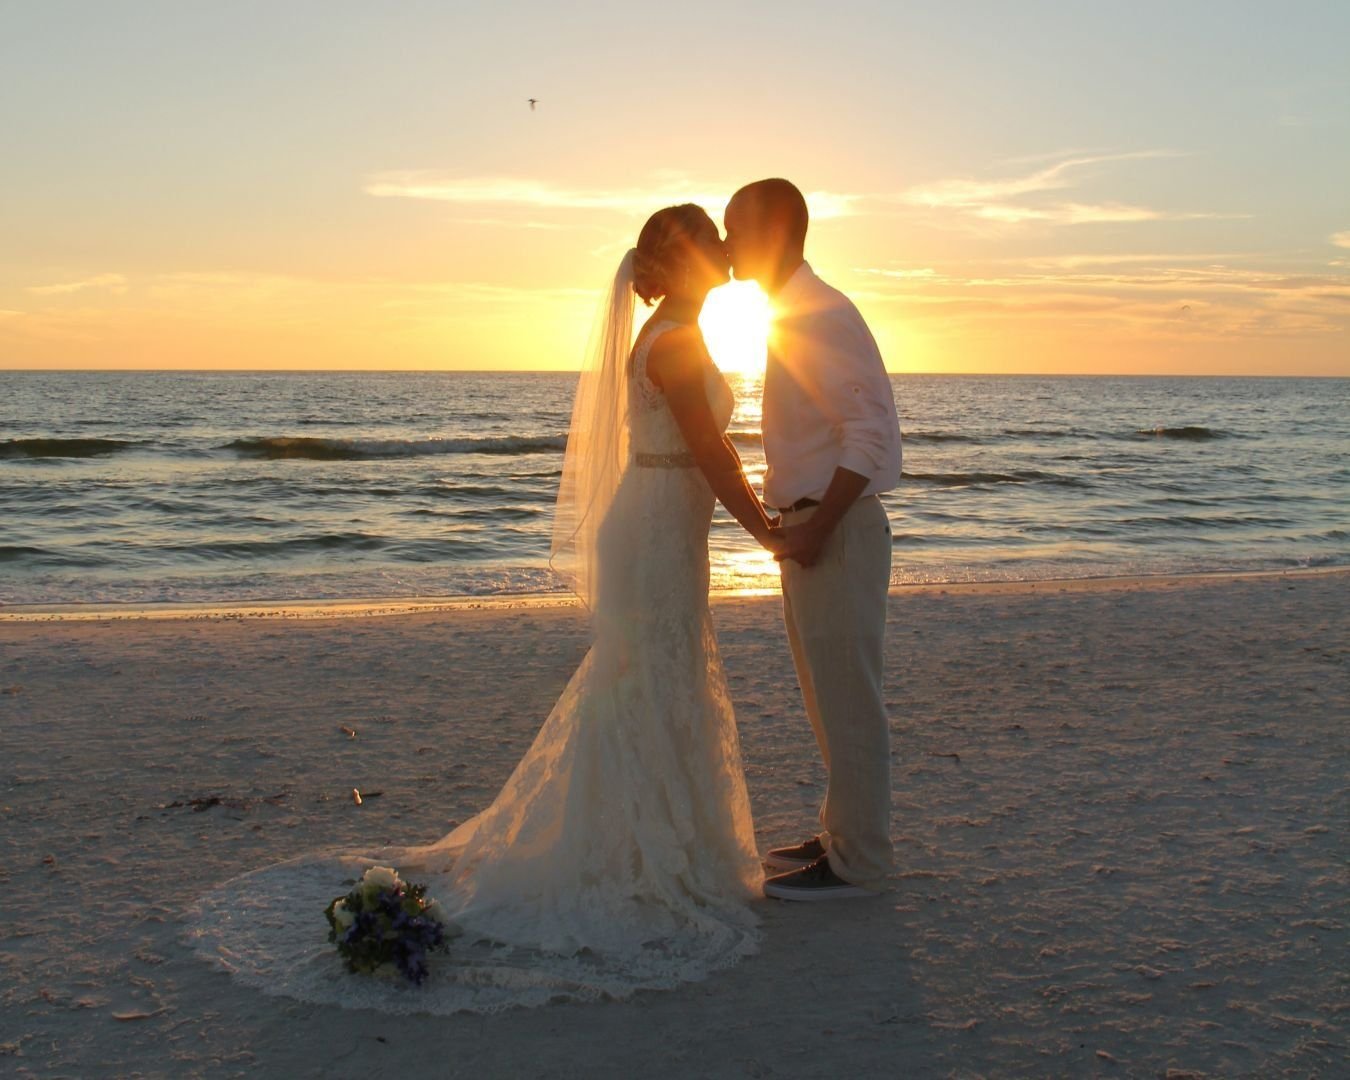 Sarasota / Siesta Key Weddings from FloridaWeddings.com